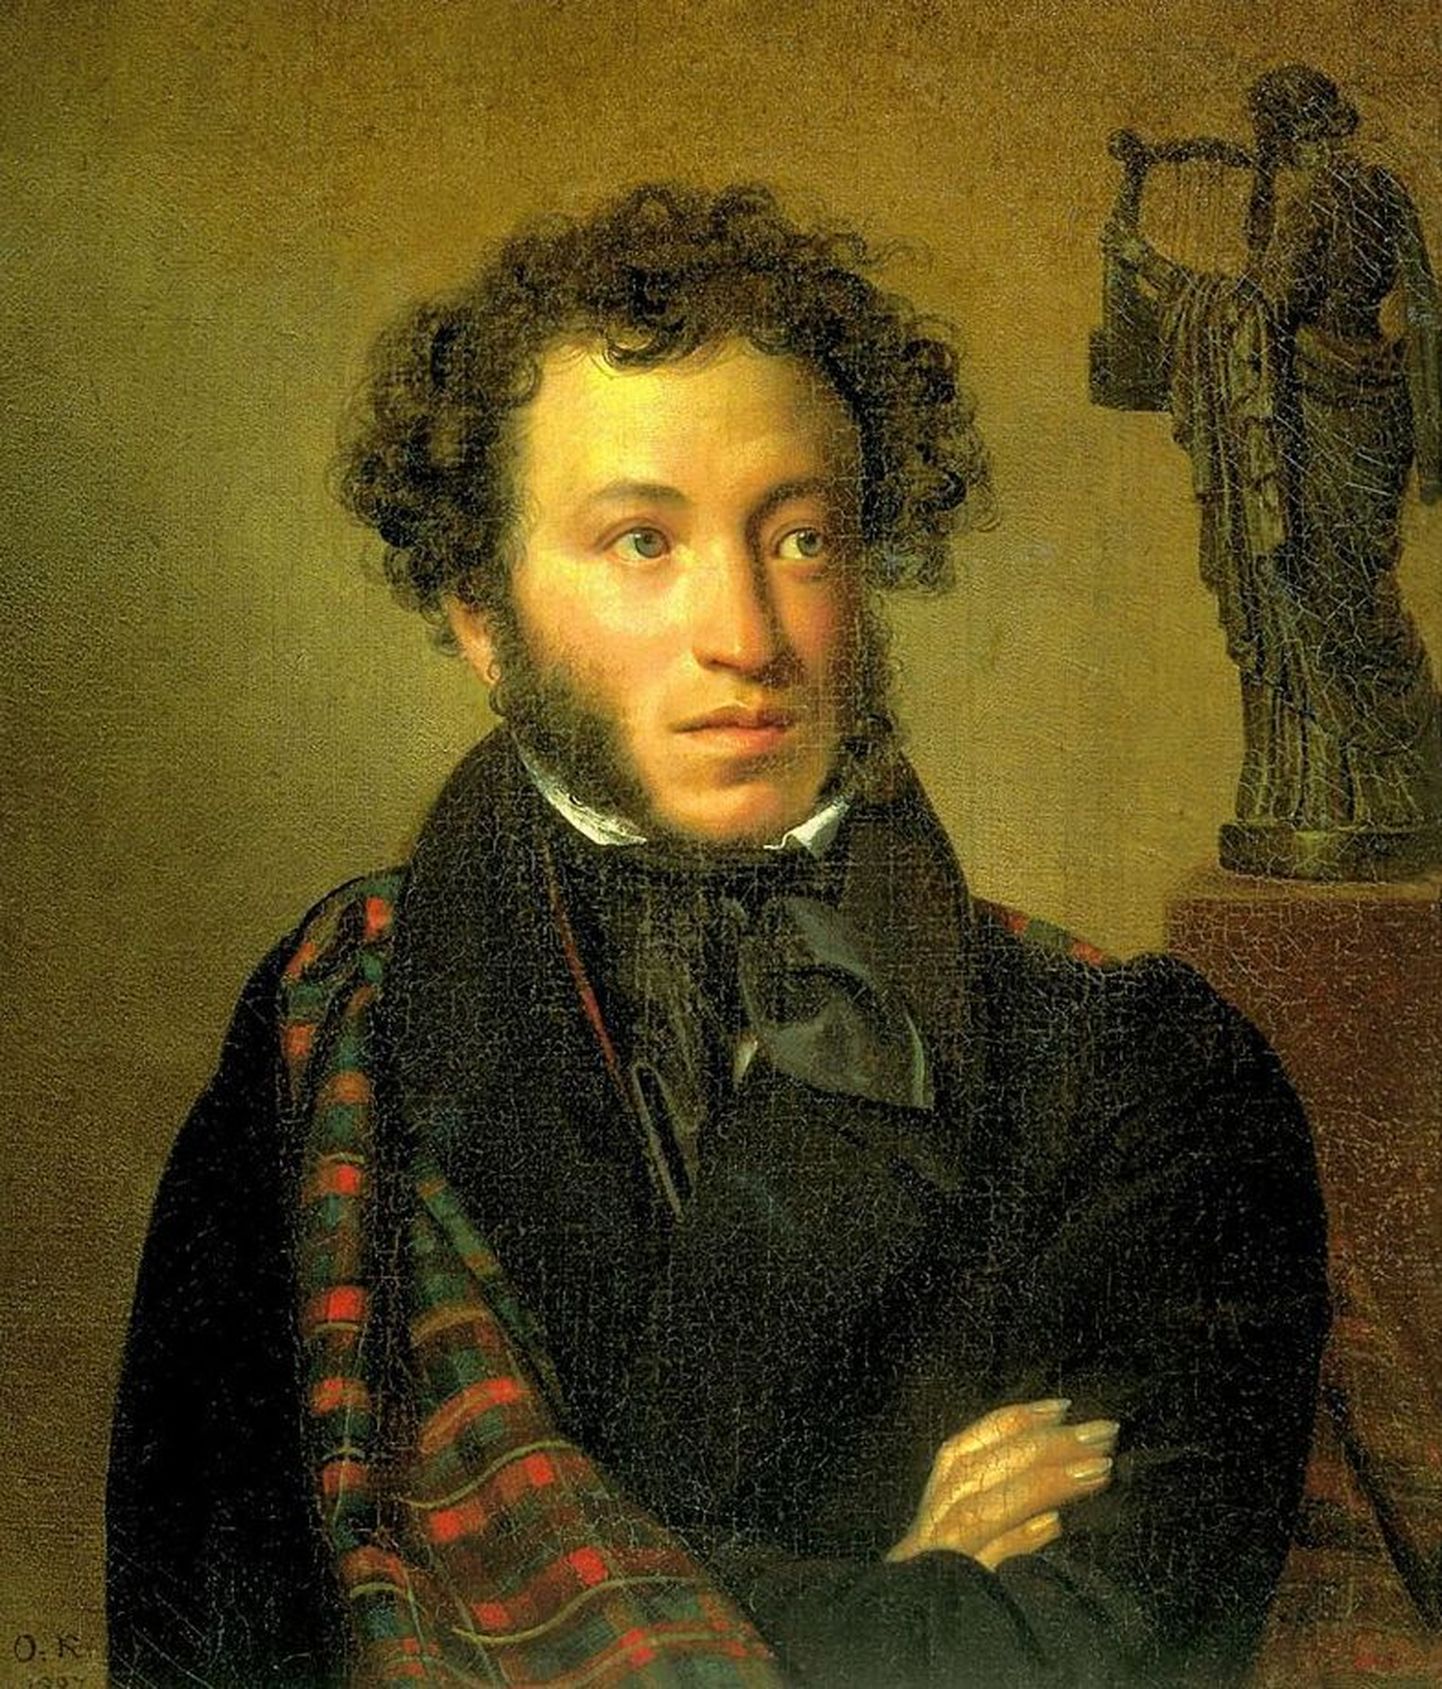 Aleksander Puškin